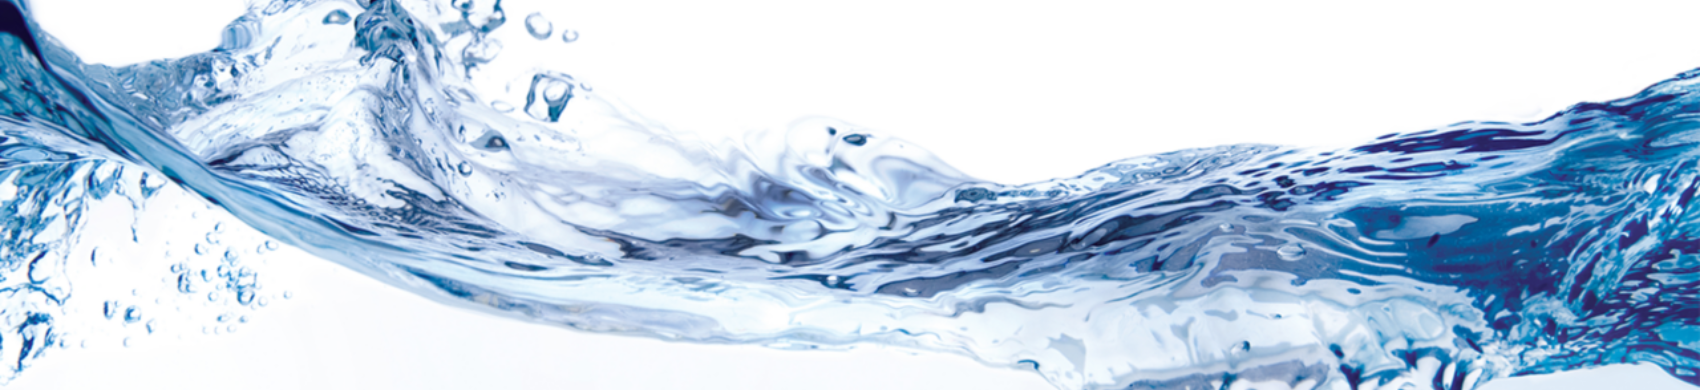 Prefiltration Water Filtration Solutions - Vita Filters